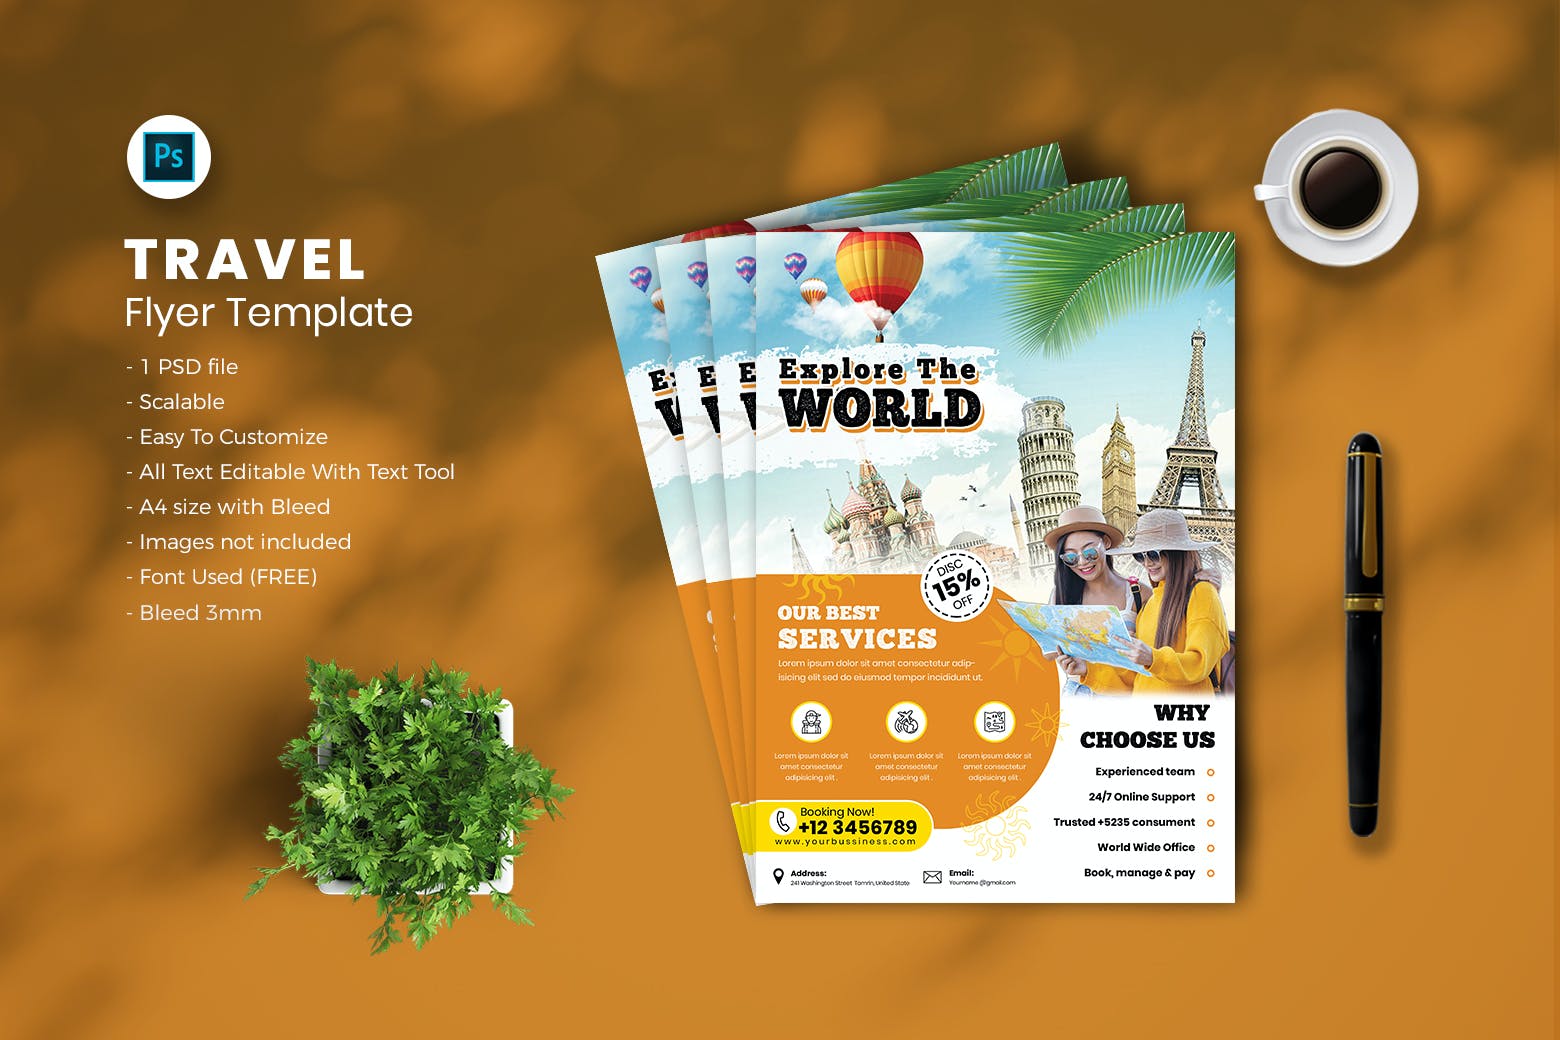 دانلود بروشور آژانس مسافرتی Travel flyer Template